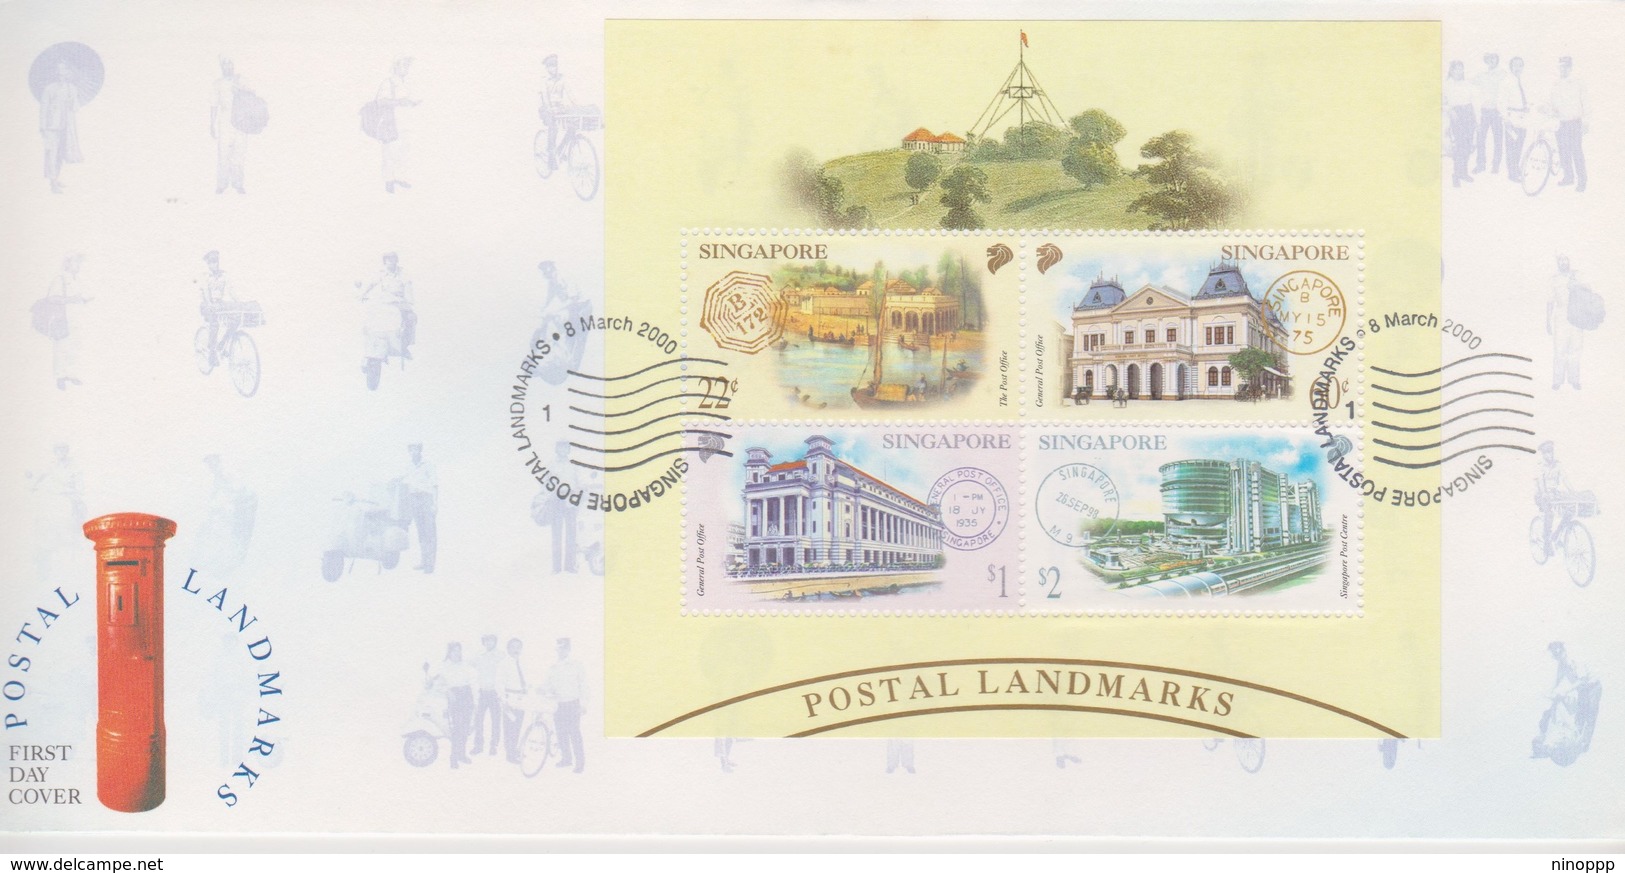 Singapore 2000 Postal Landmarks Miniature Sheet FDC - Singapore (1959-...)